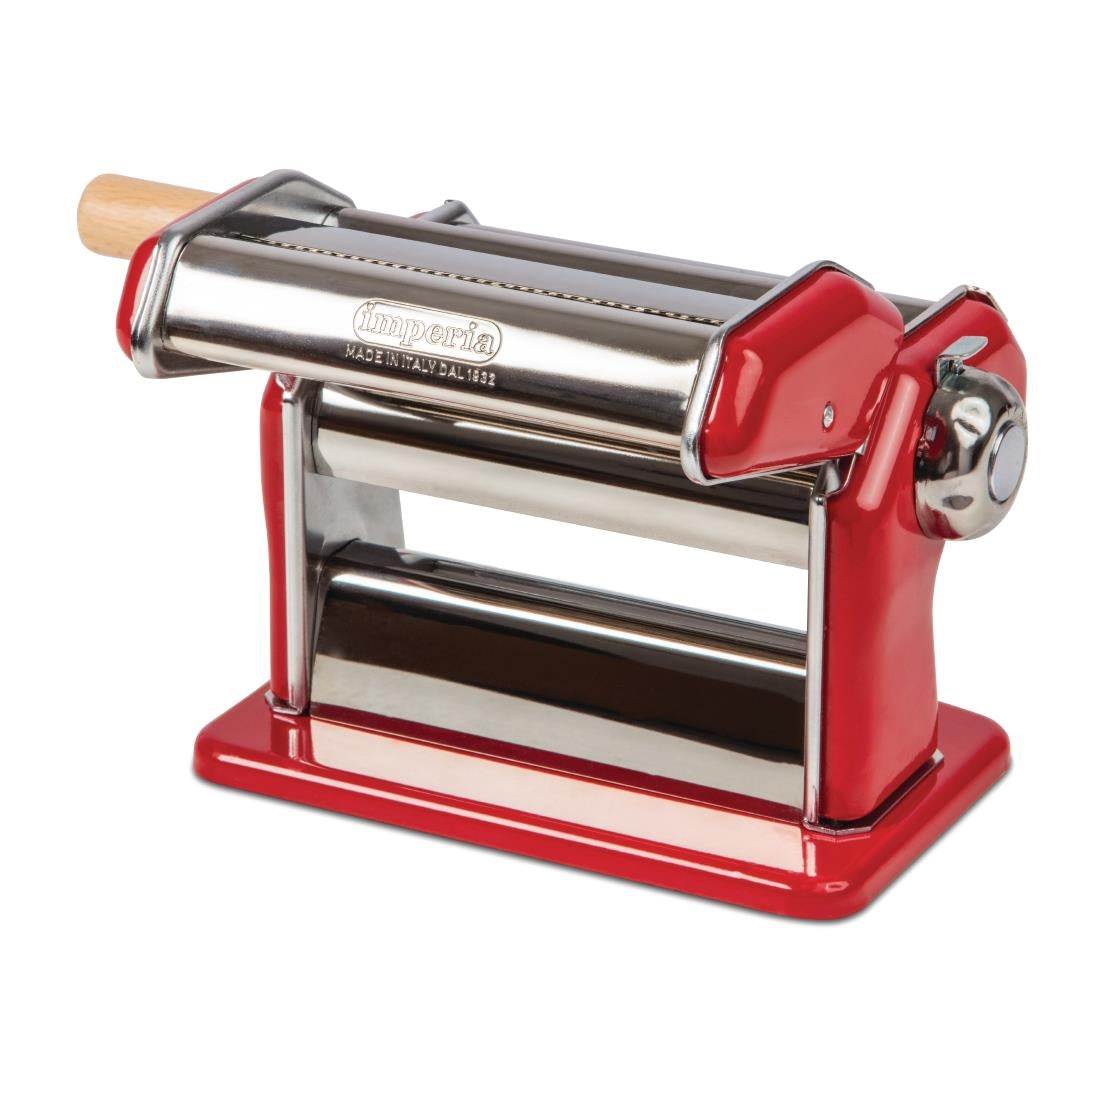 DA426 Imperia Manual Pasta Machine Red JD Catering Equipment Solutions Ltd